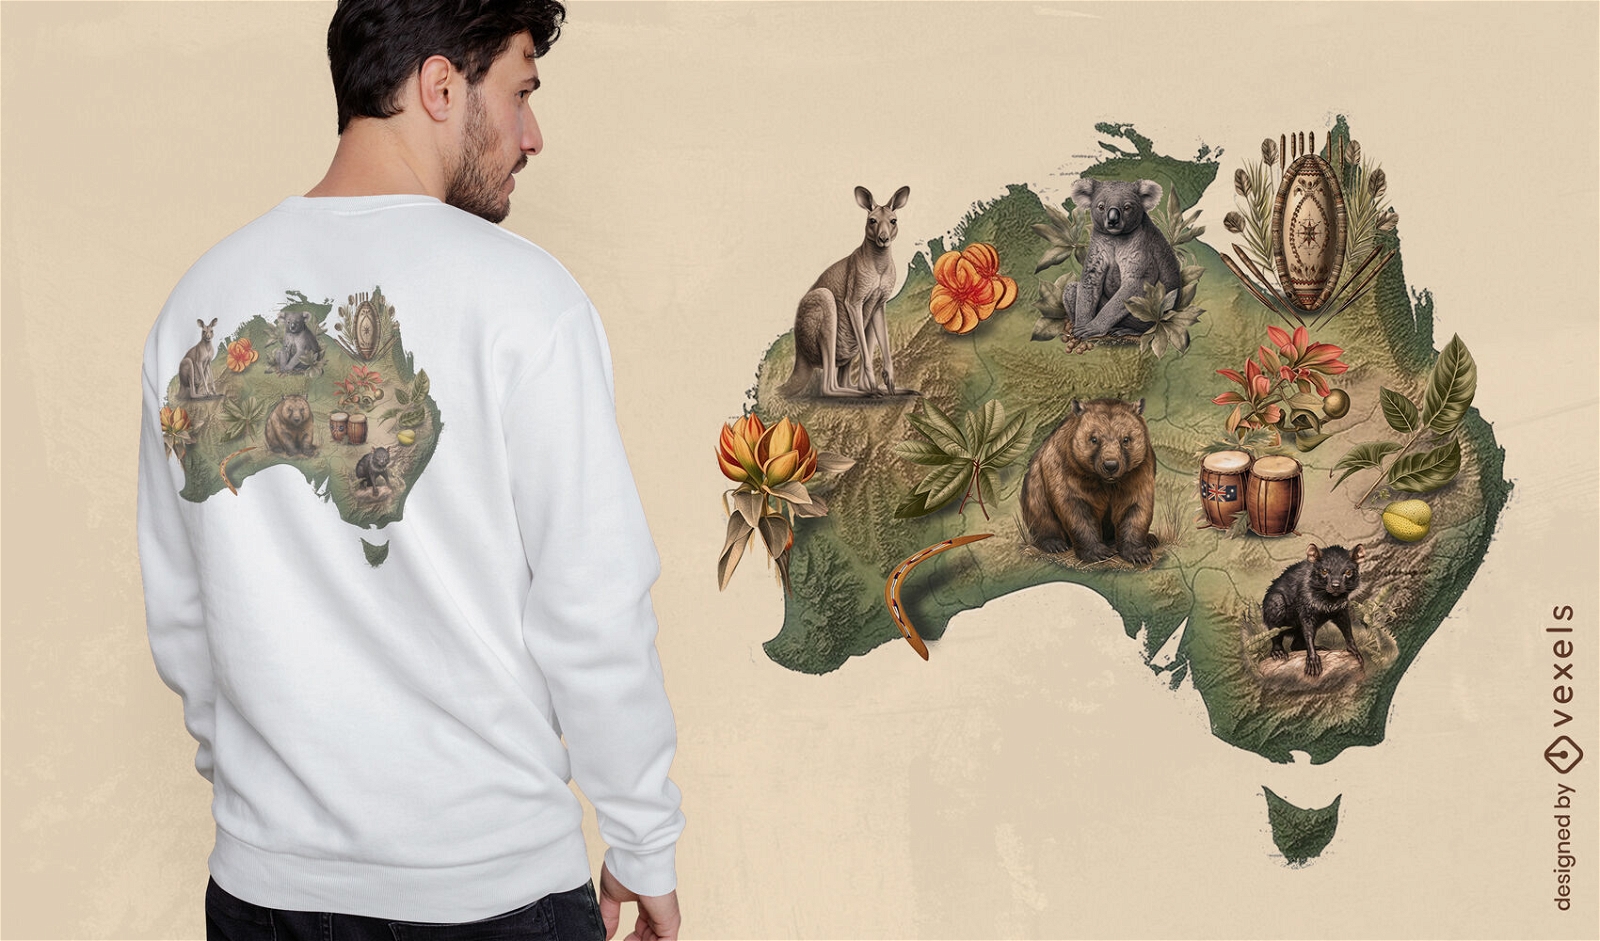 Diseño de camiseta de vida silvestre australiana.